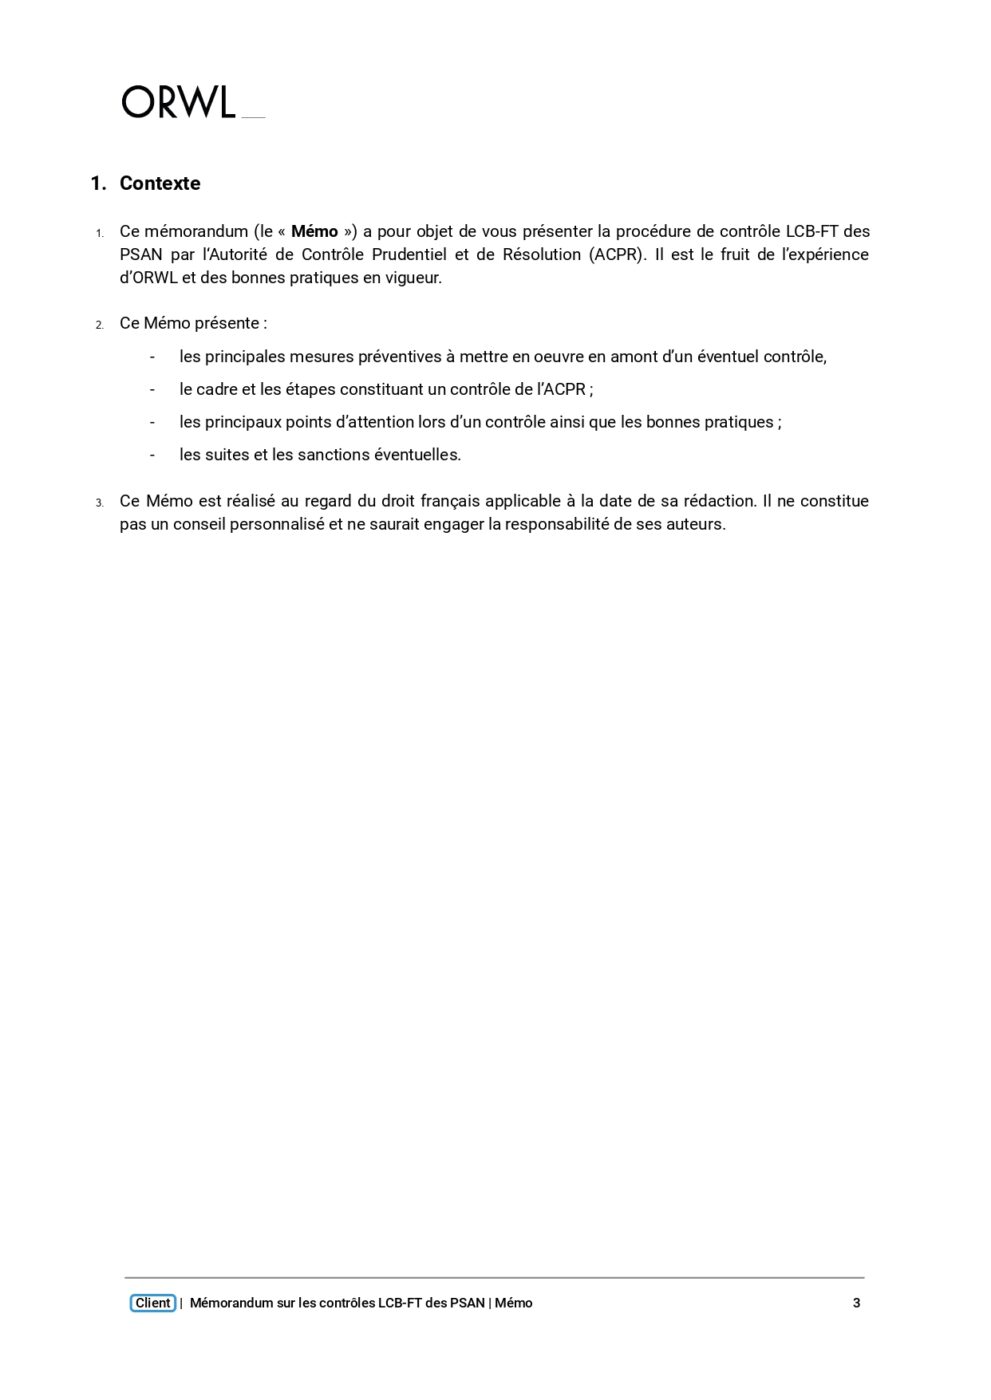 202402_Memorandum_Controle LCB-FT (ORWL) page 3